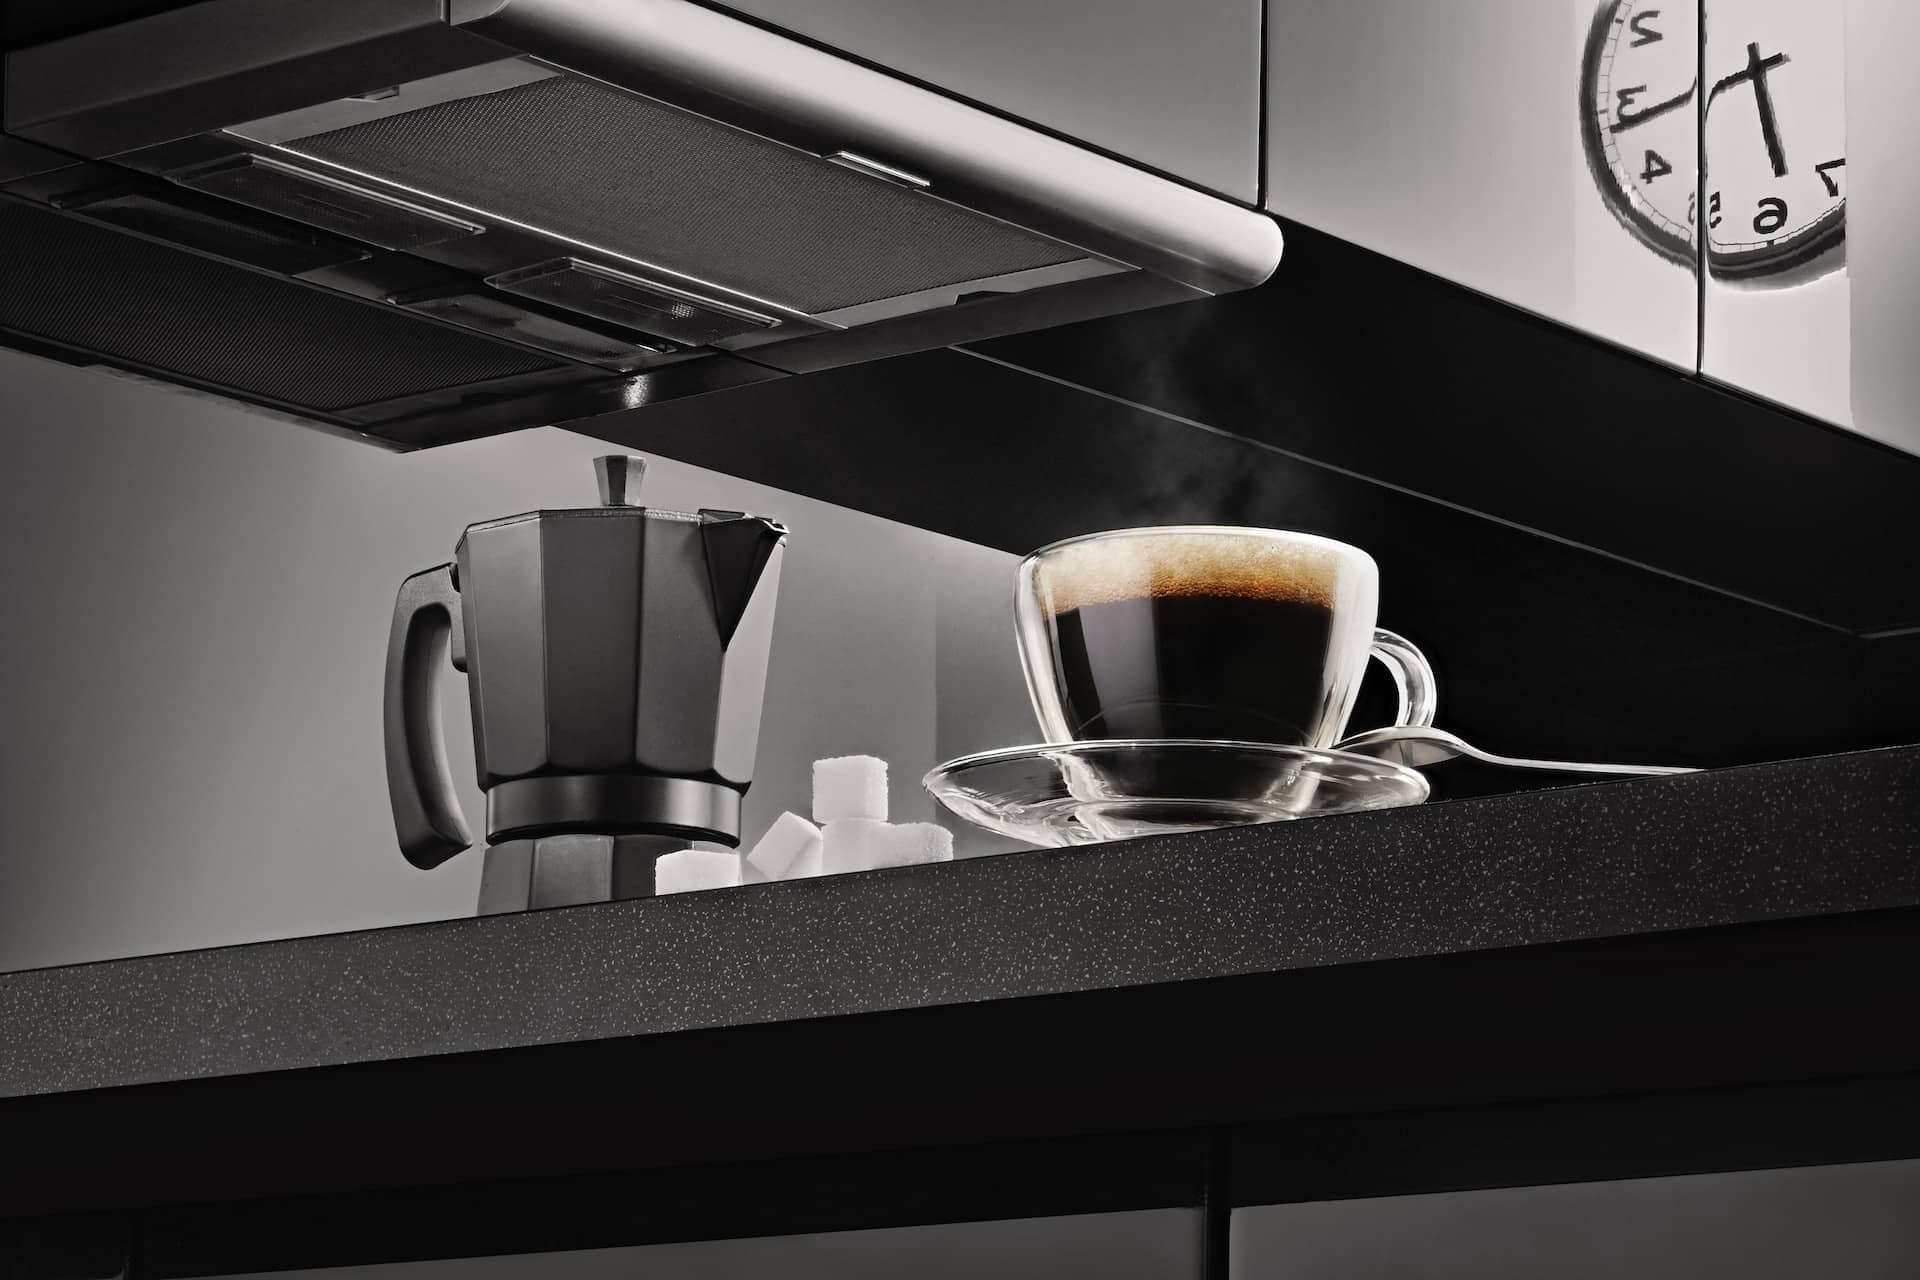 Image shows a Moka pot (or stovetop percolator) on a countertop next to a hot cup of coffee